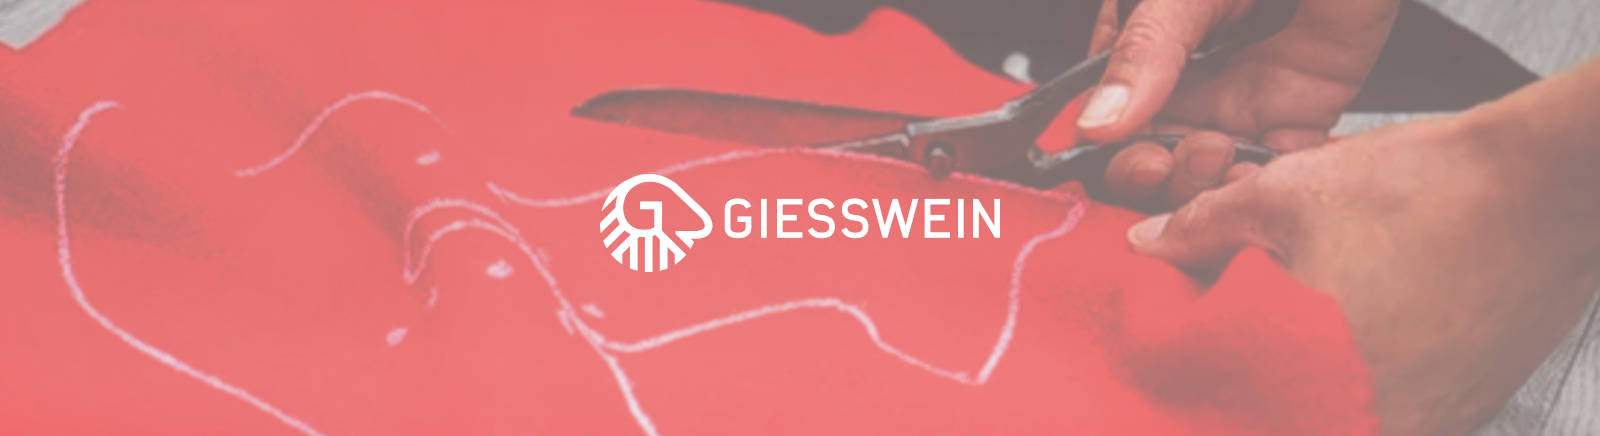 Giesswein Markenschuhe online bestellen bei Prange Schuhe